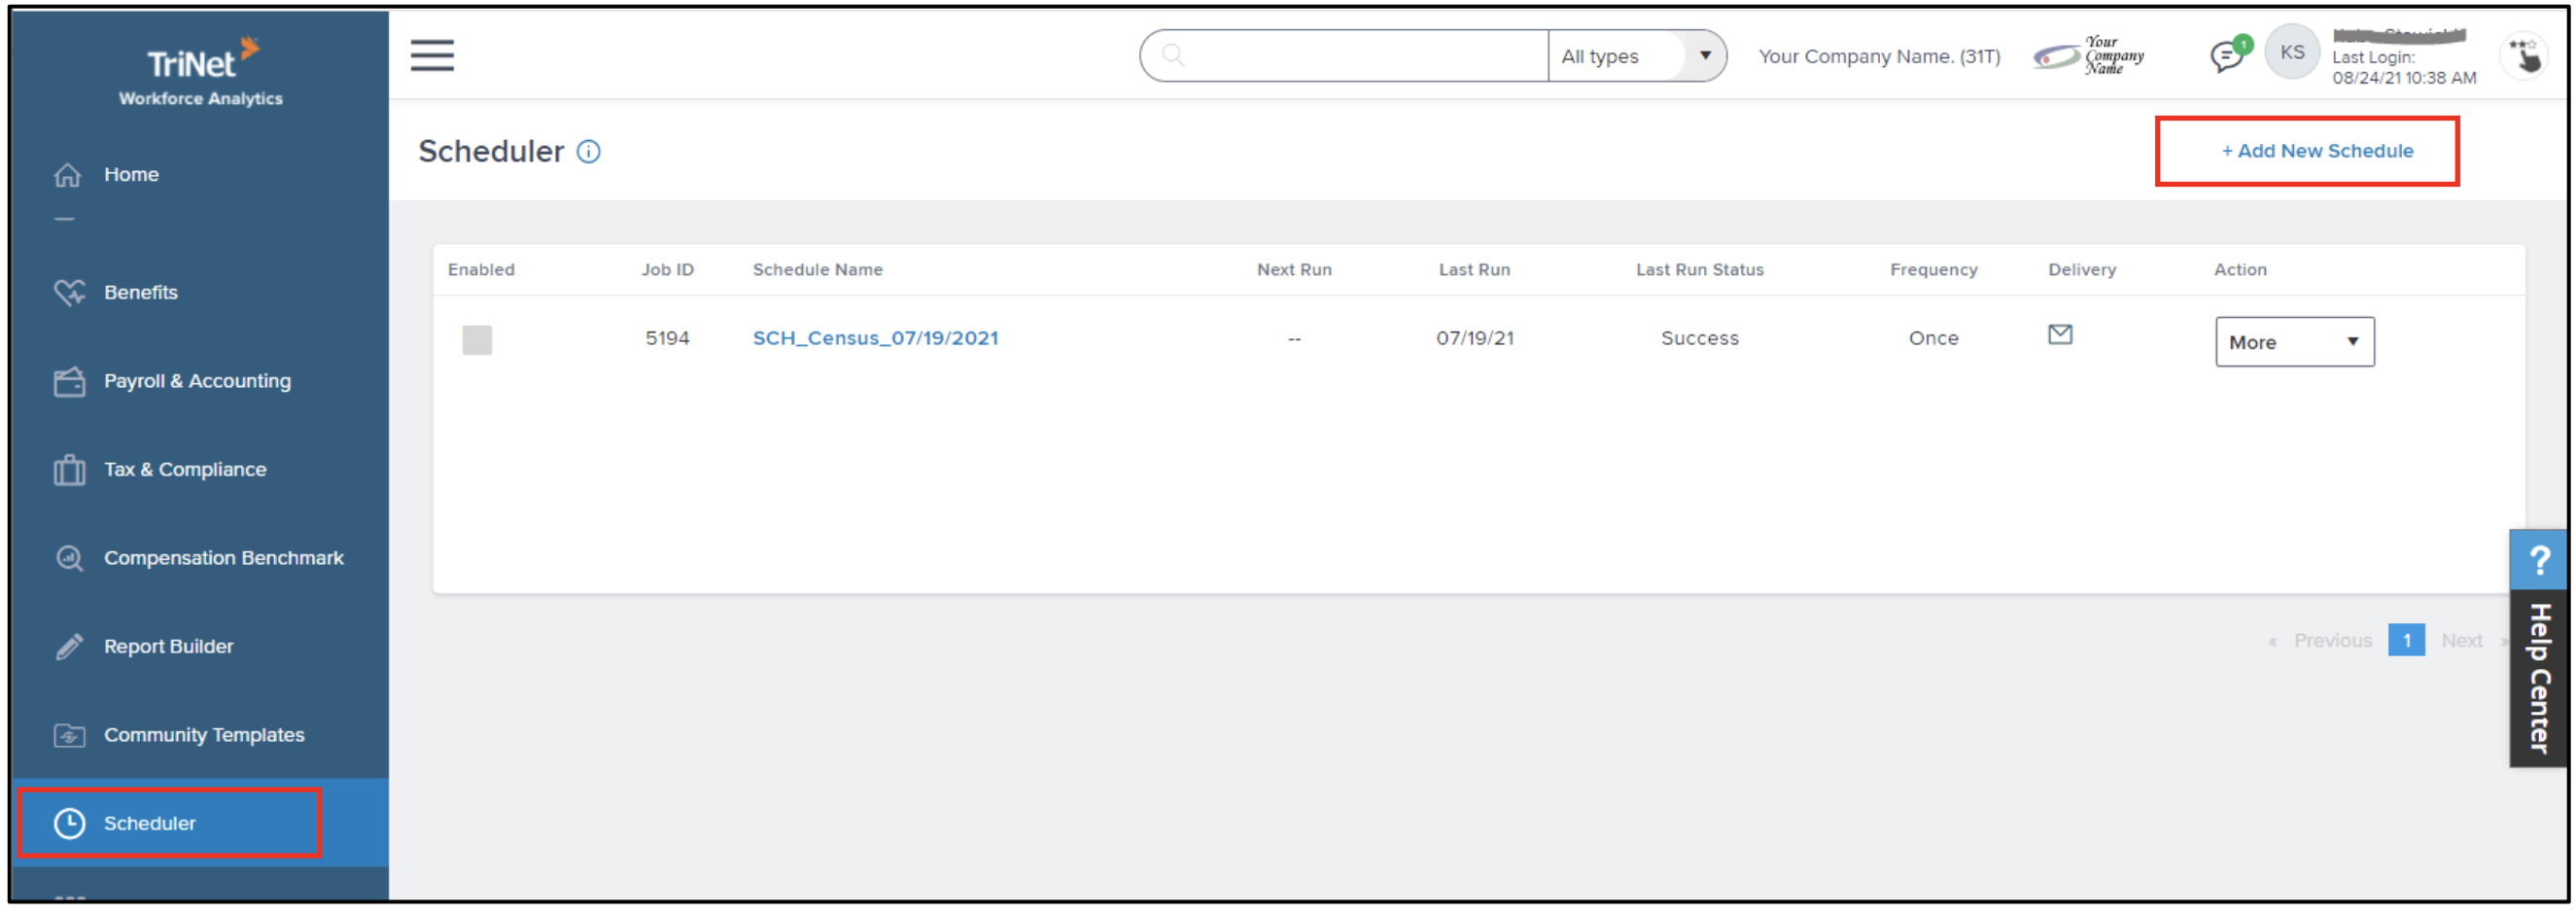 Screenshot of TriNet platform, highlighting buttons for Scheduler and Add New Schedule.